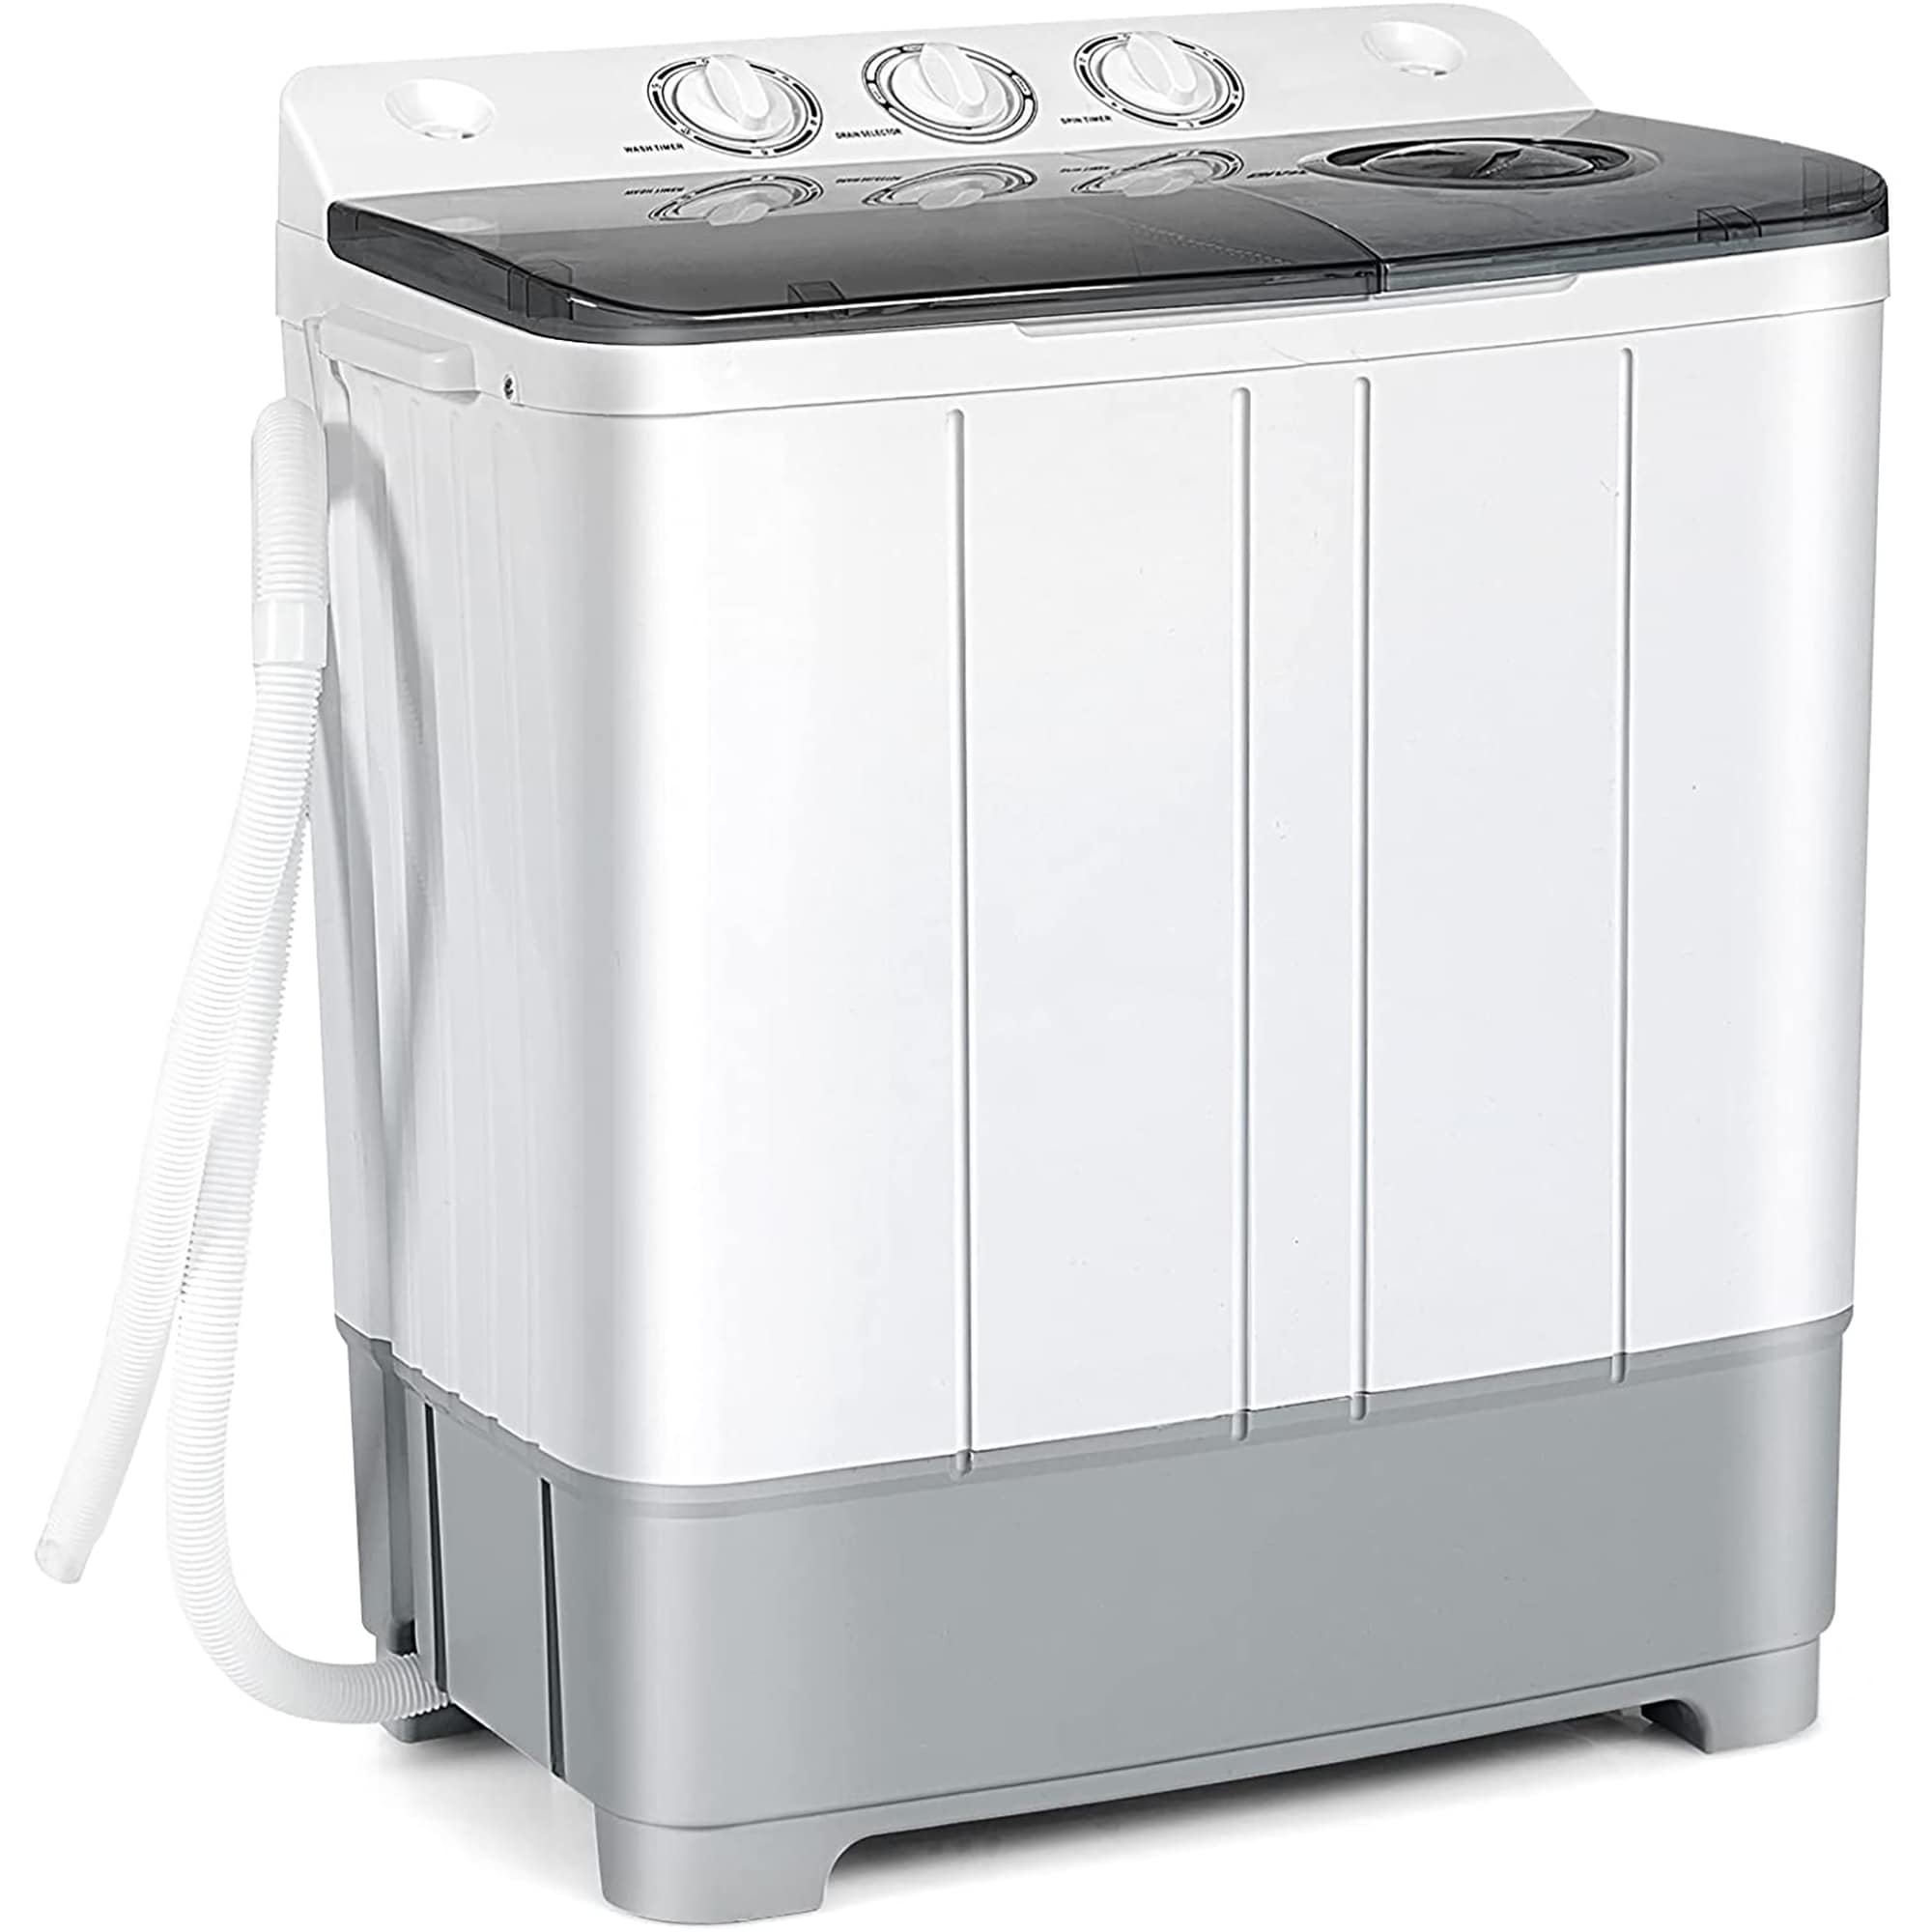 20lb (12+8) lbs Compact Mini Portable Twin Tub Washing Machine